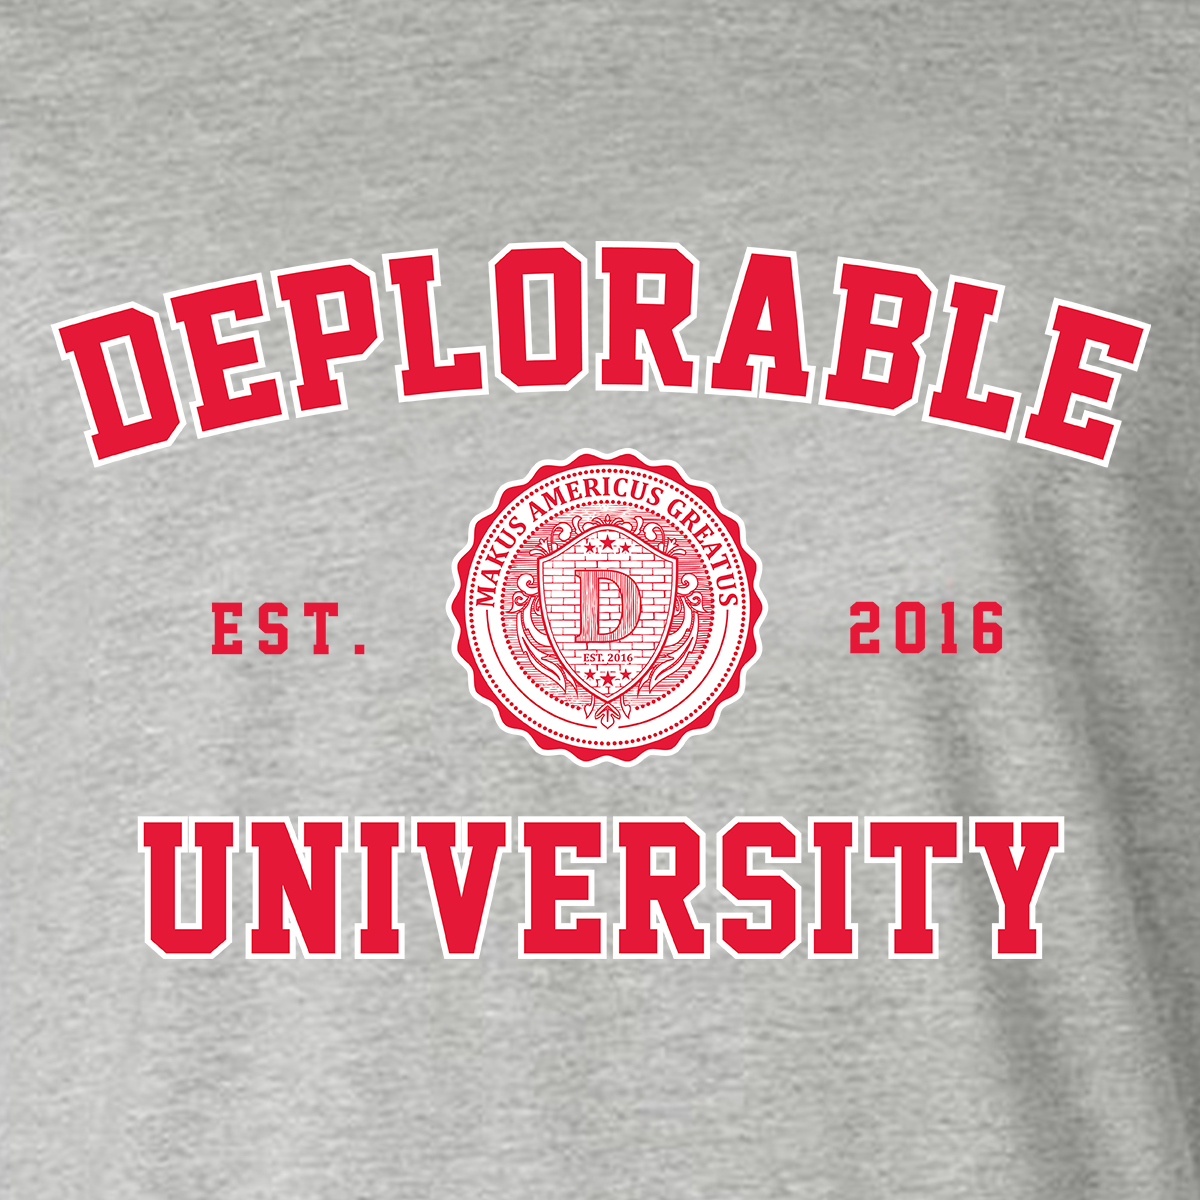 Deplorable University Women's T-Shirt - Grey